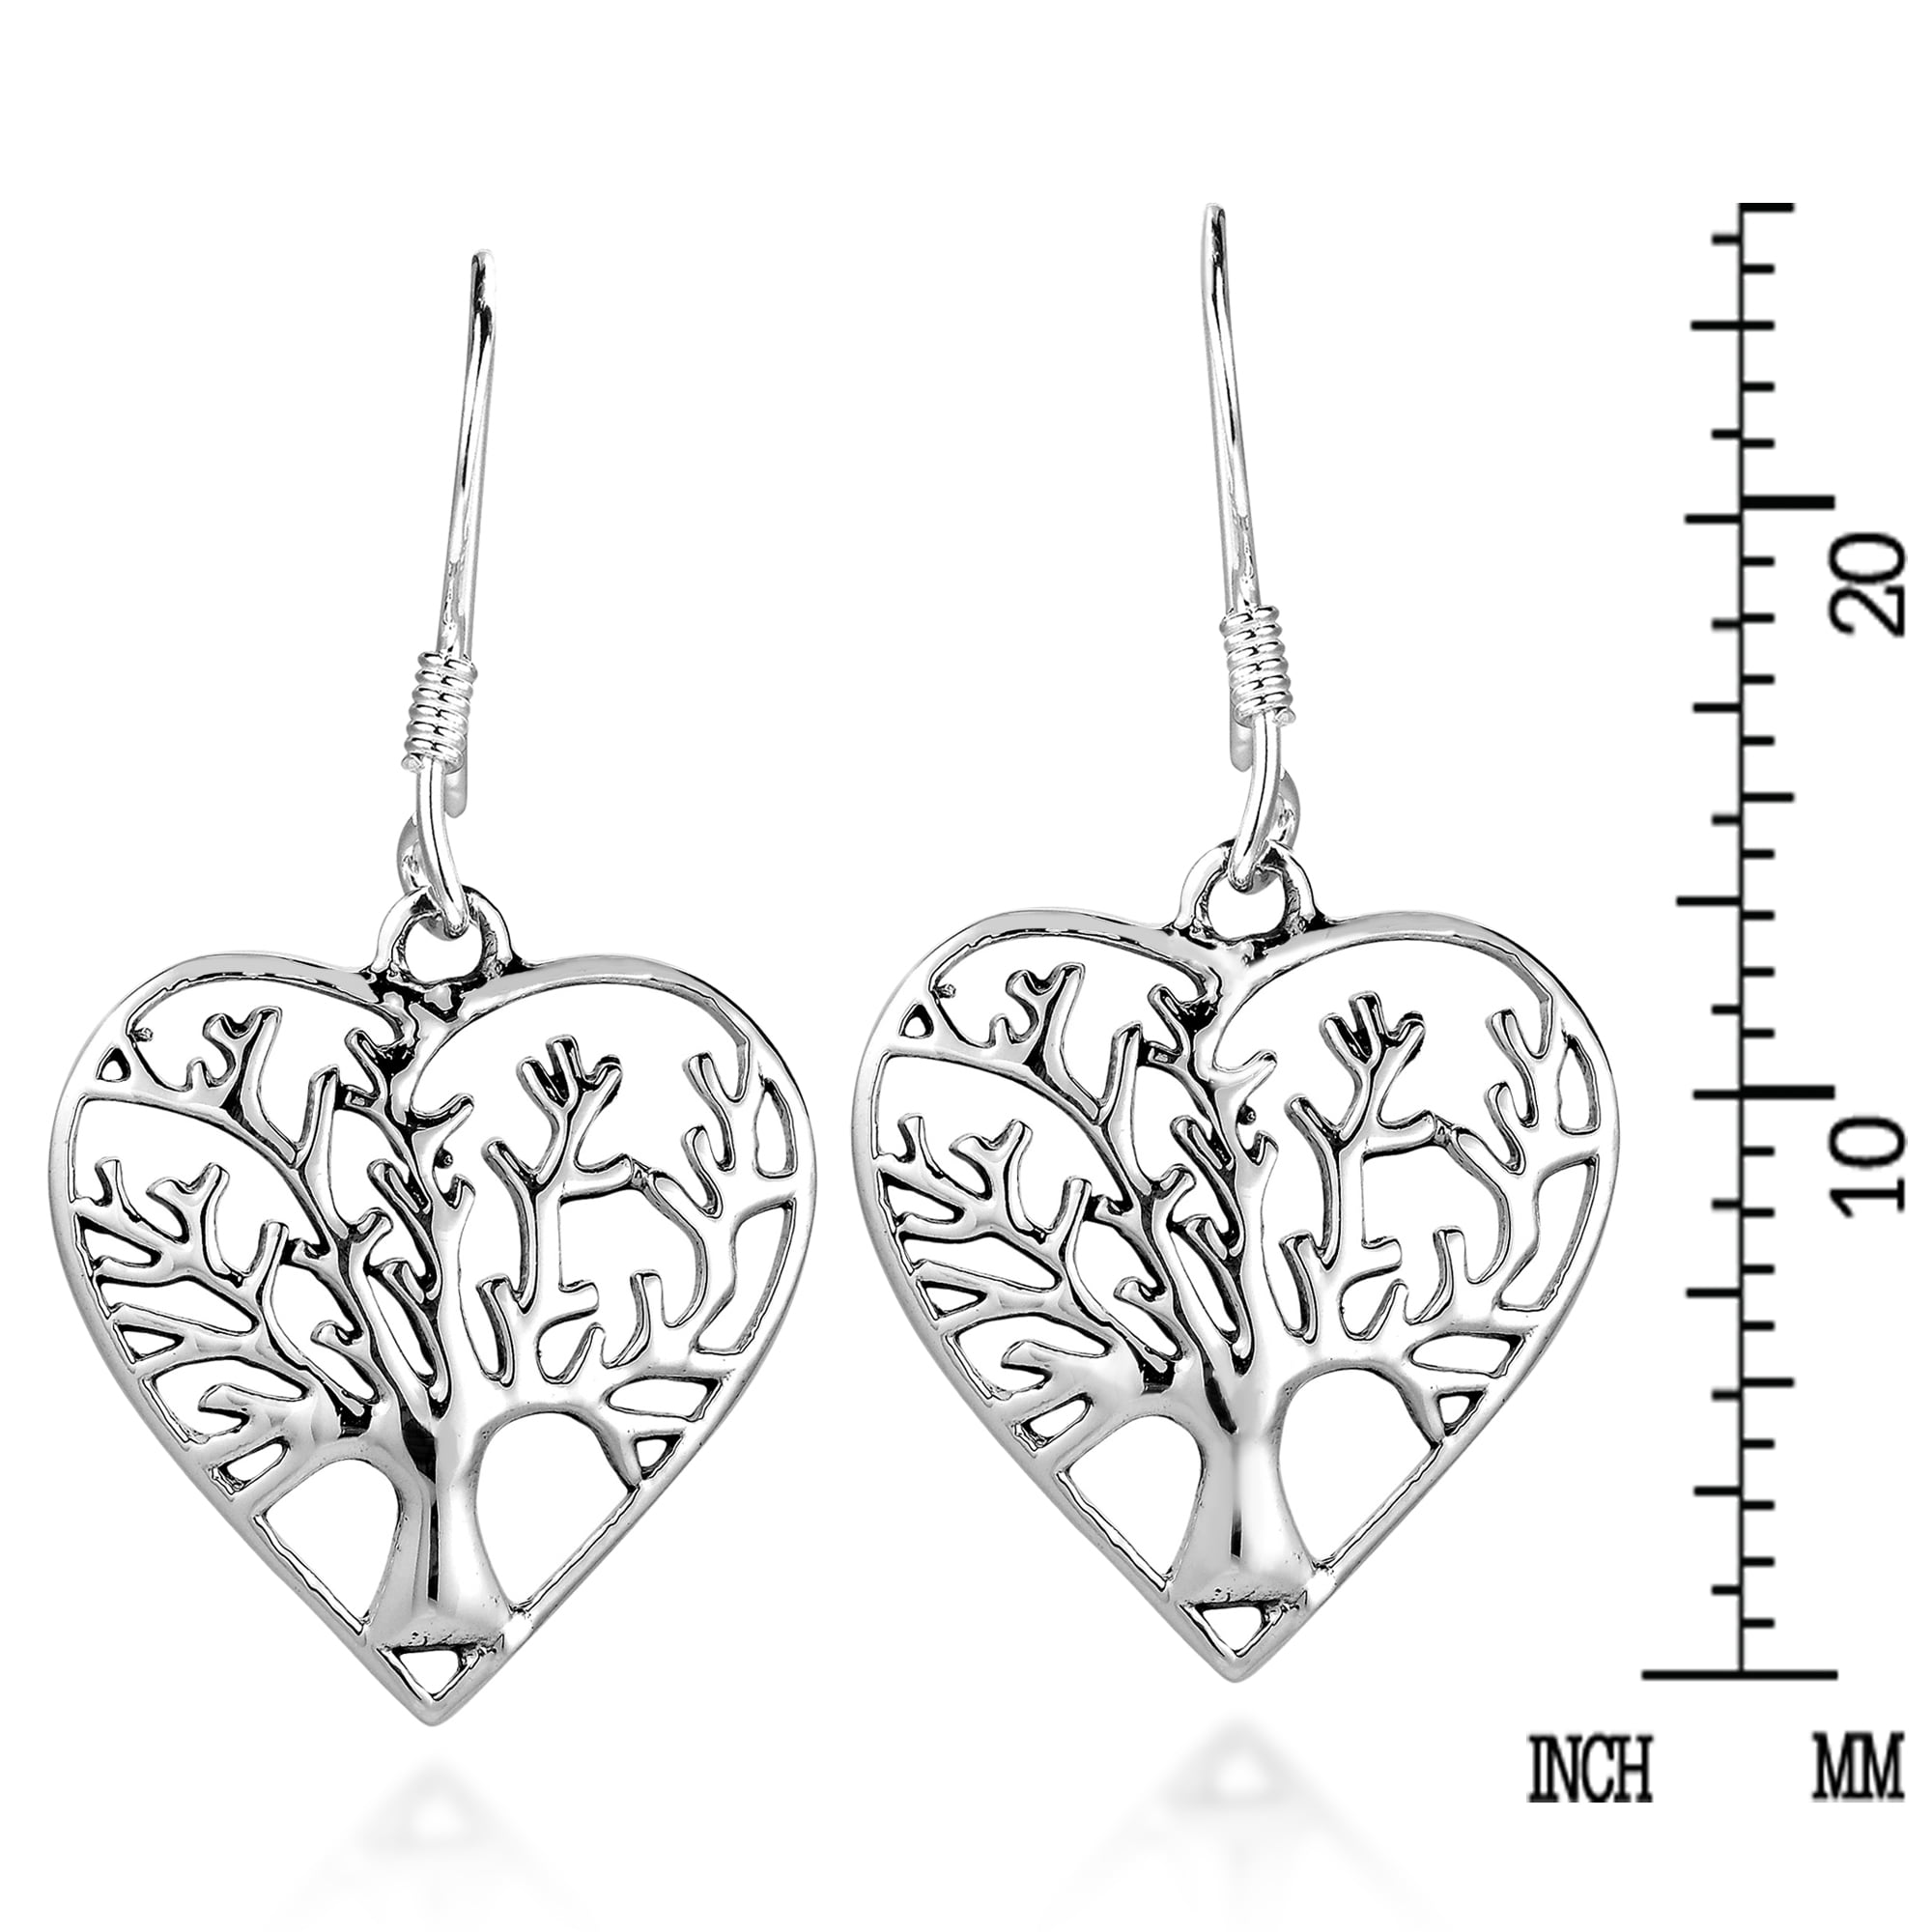 Earrings tree of life heart shape